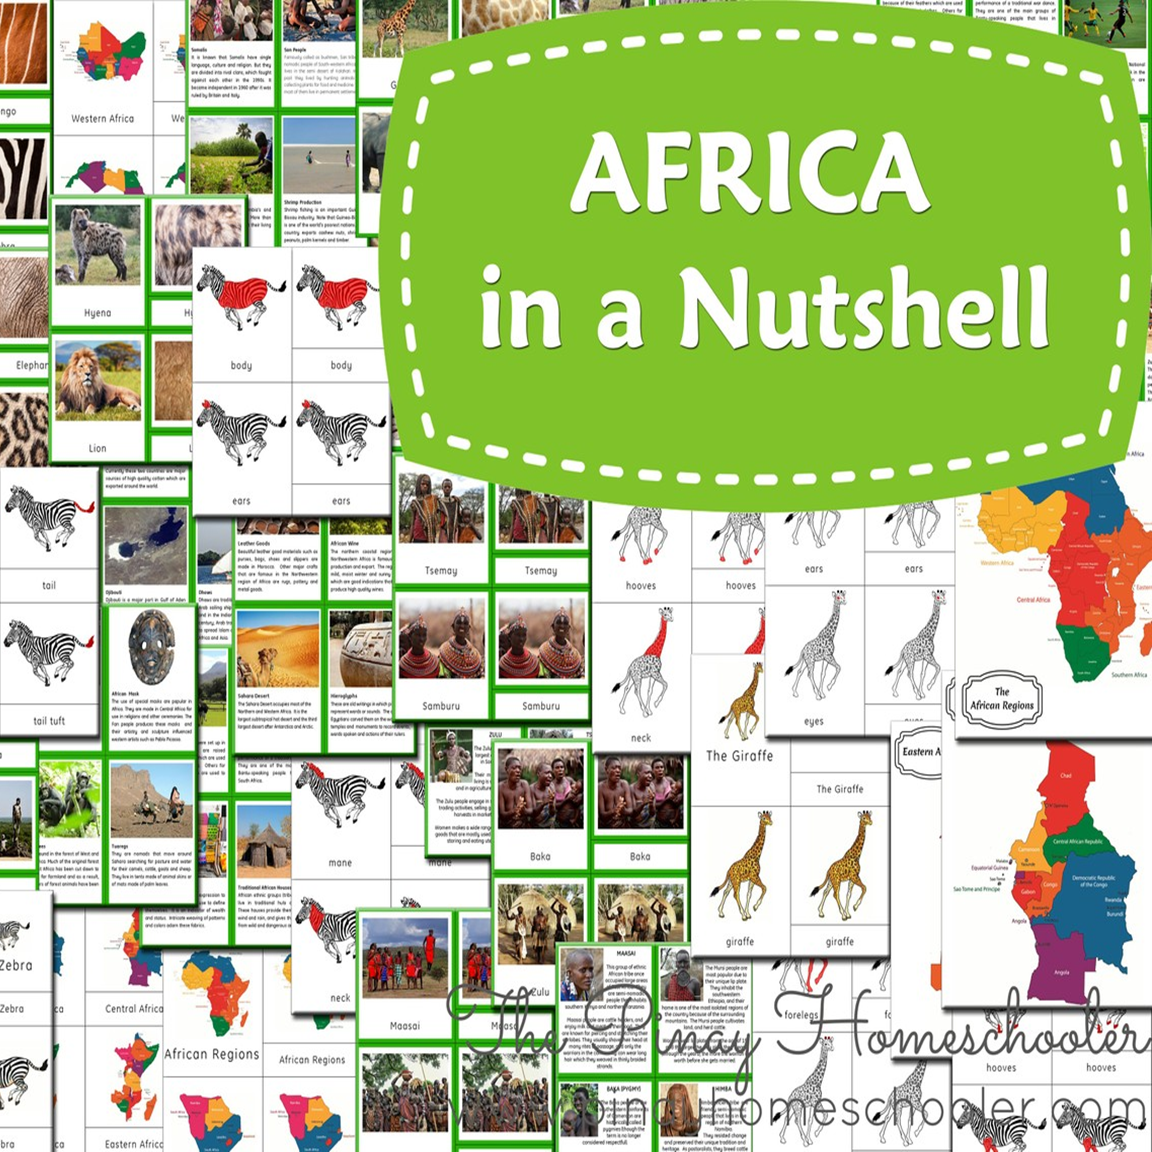 Africa in a Nutshell